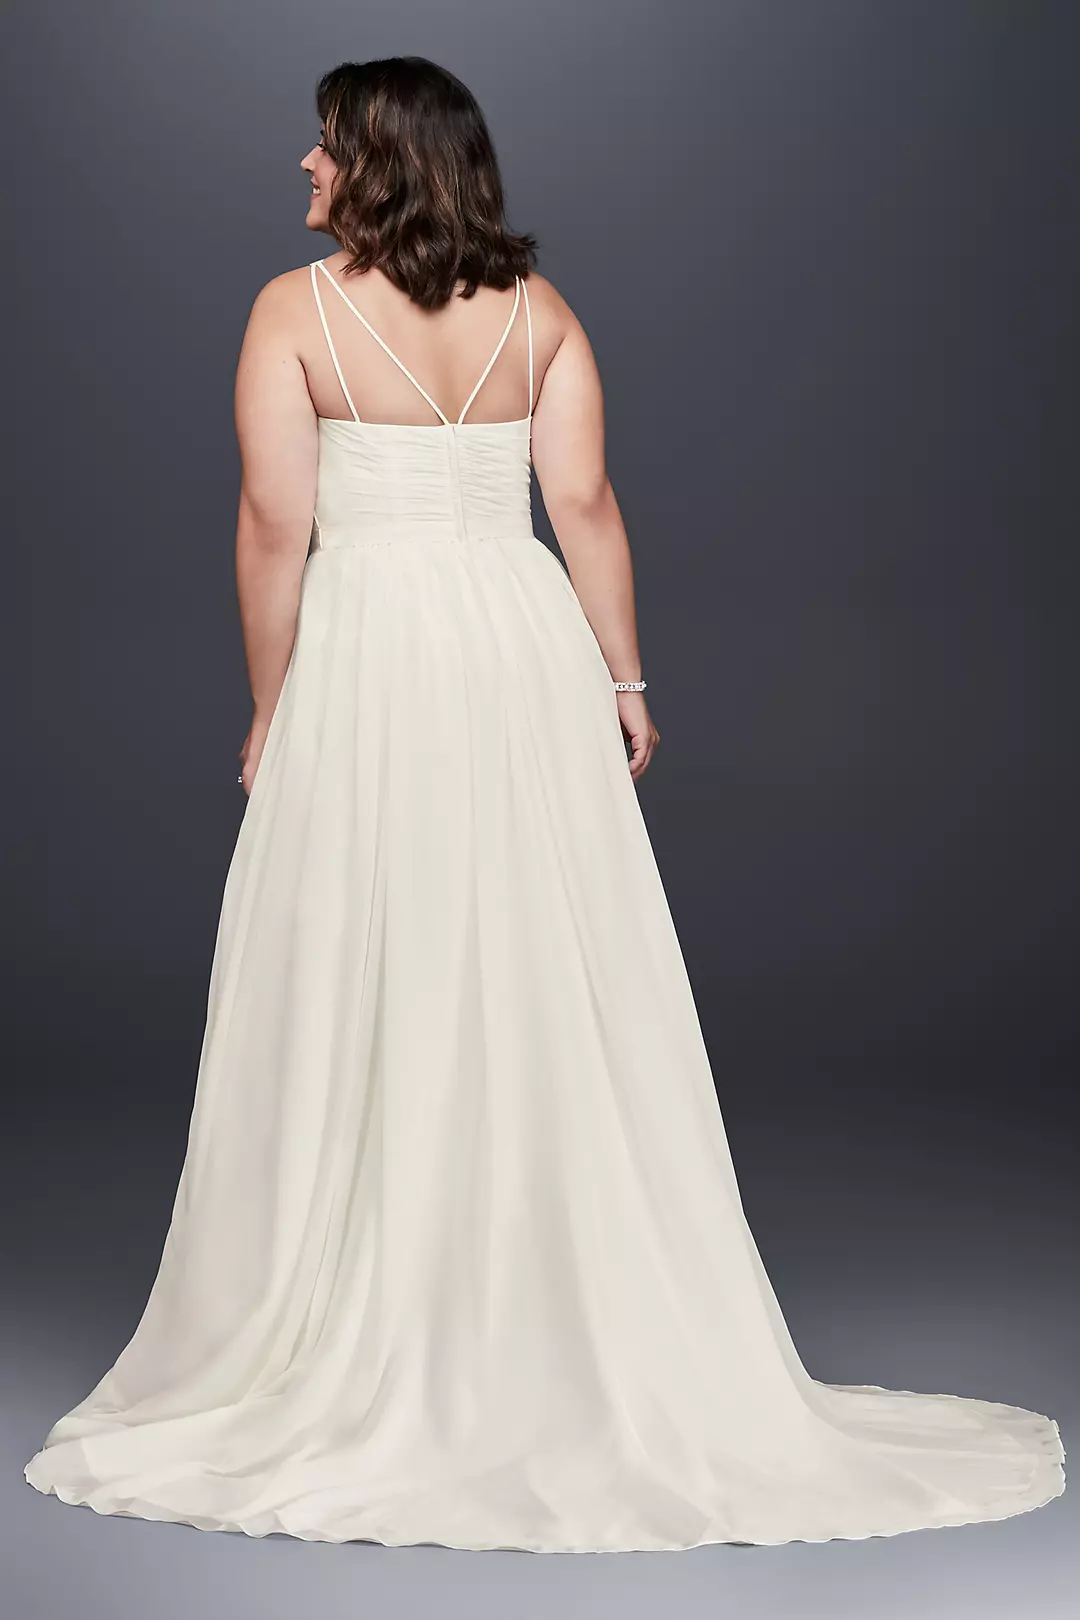 Beaded Chiffon Halter Plus Size Wedding Dress Image 2